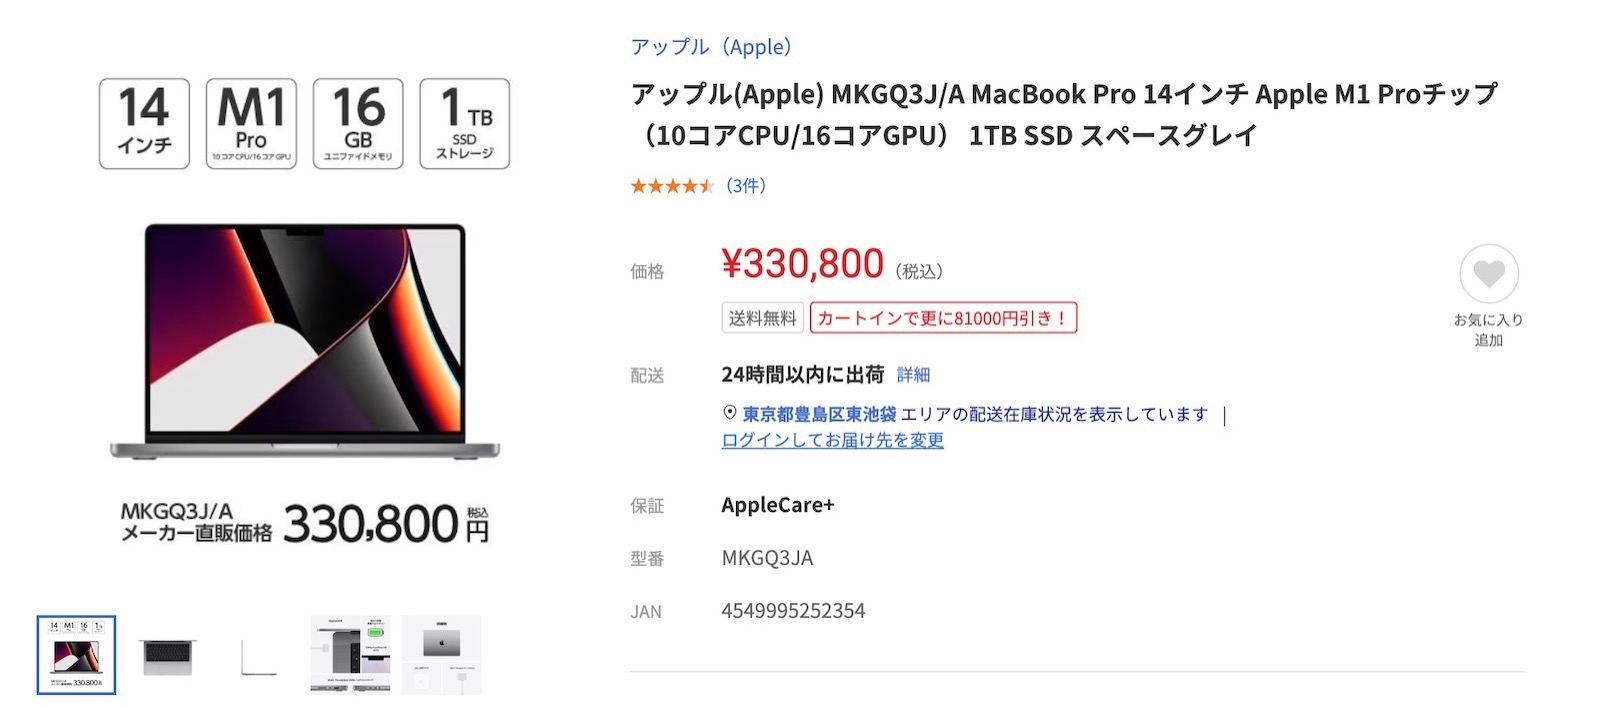 Yamada Web Com Sale Again